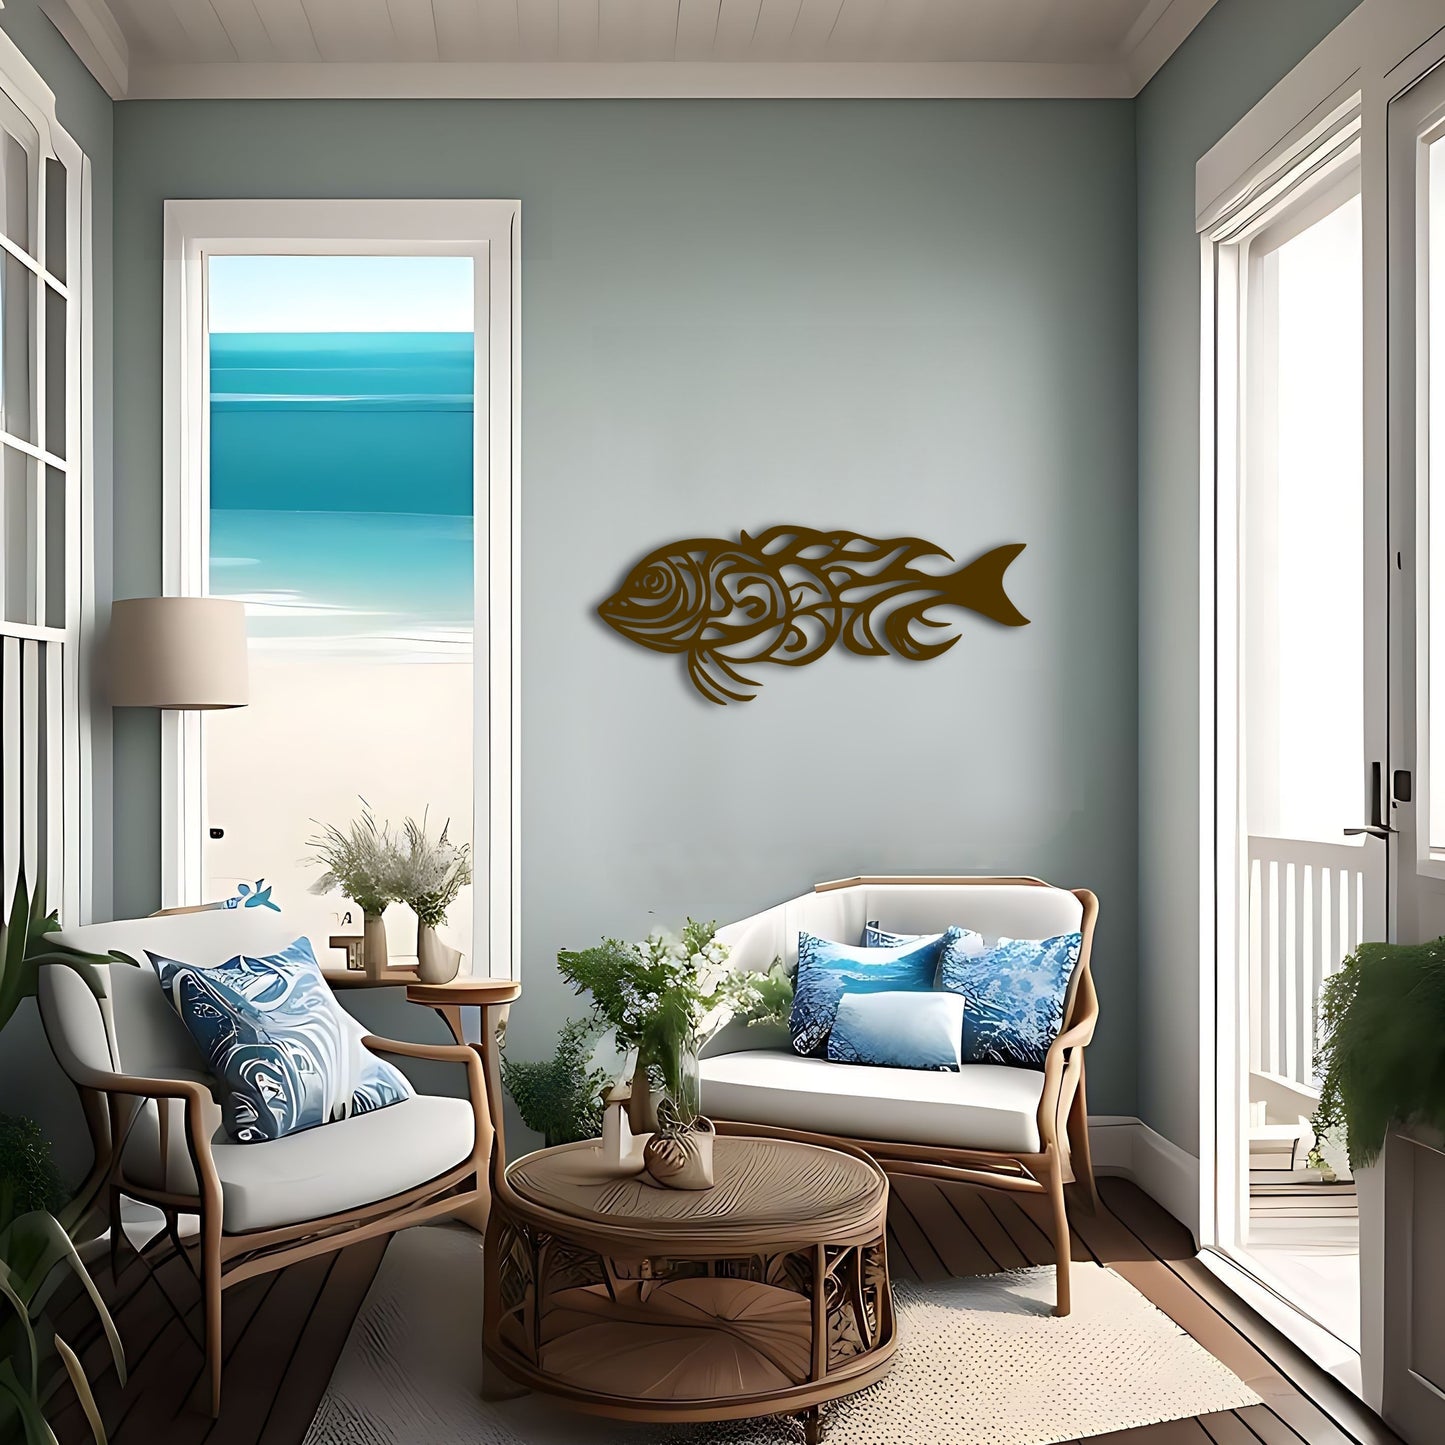 Polynesian-Inspired Dragon Fish Metal Wall Art for Ocean Lovers